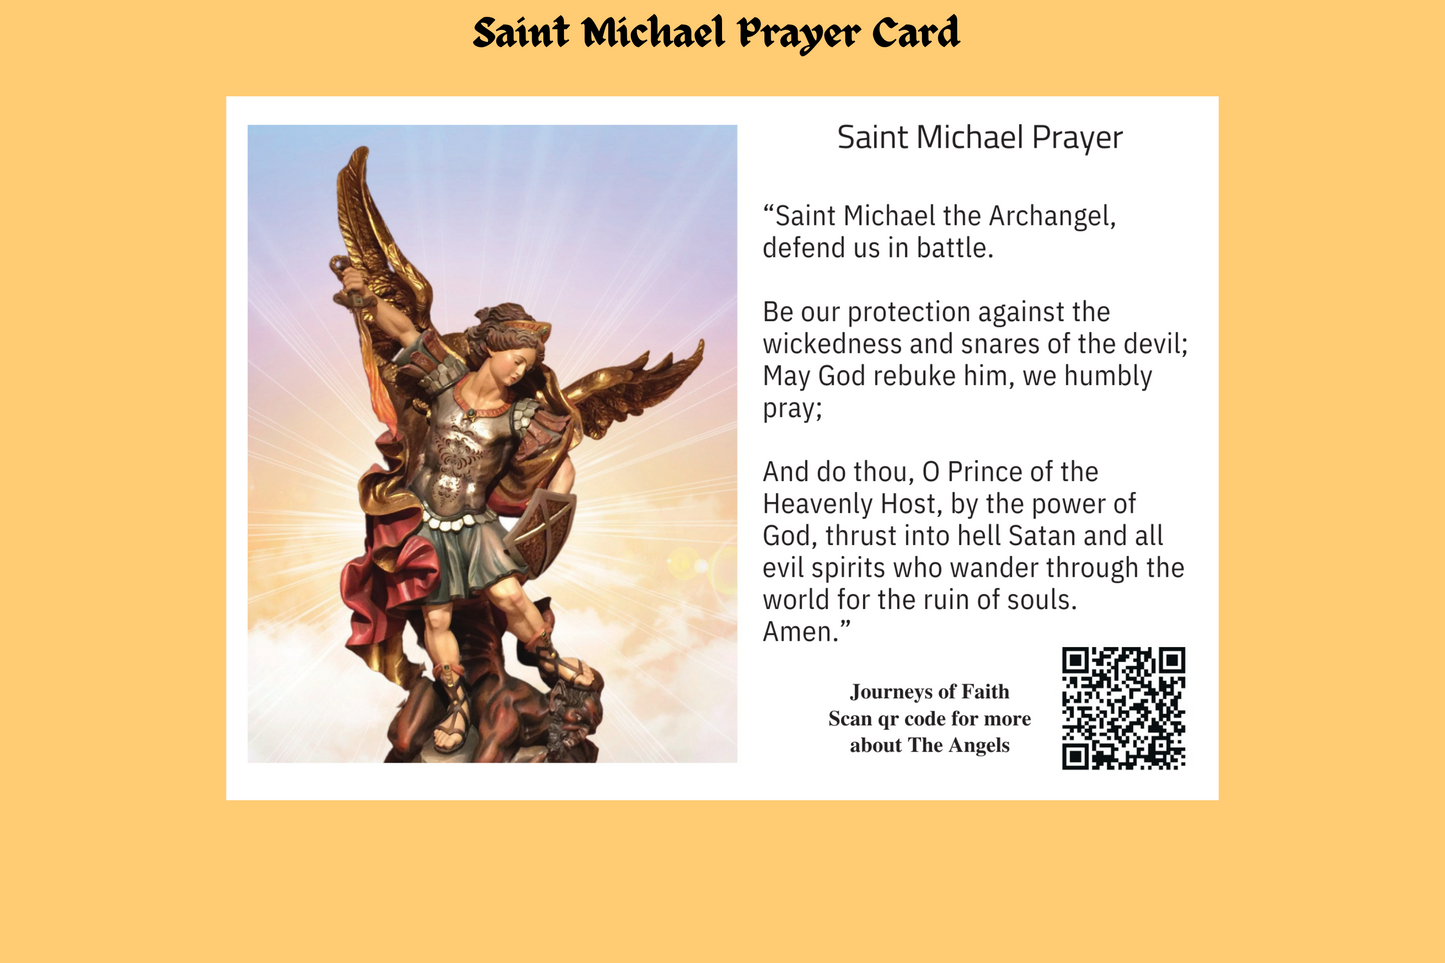 Saint Michael Prayer Card